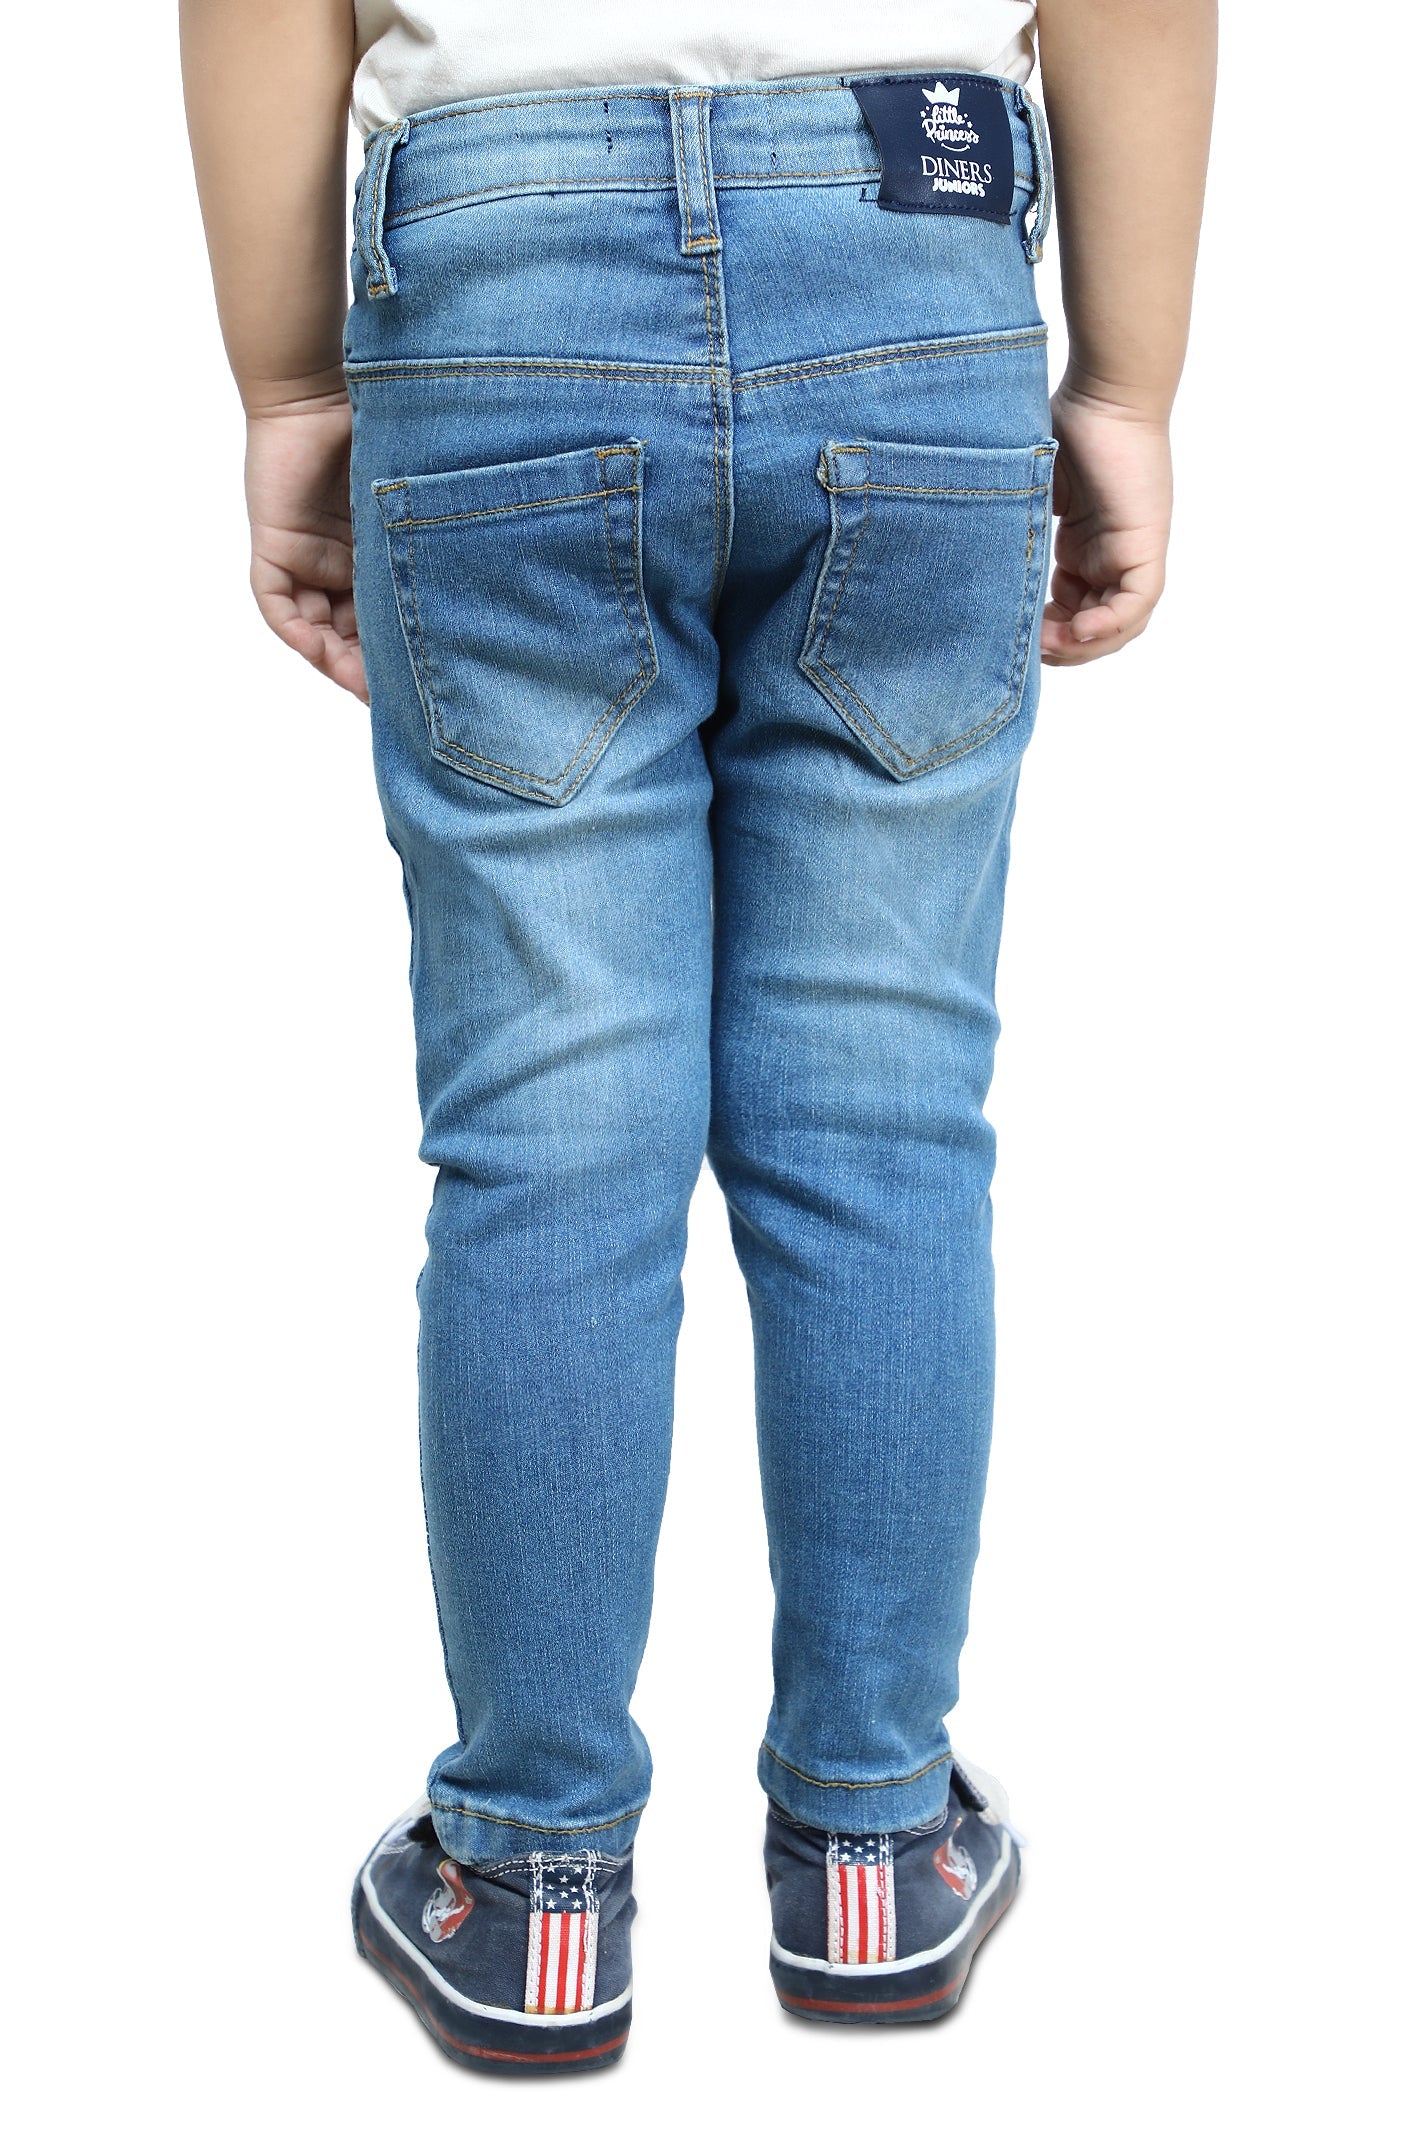 Trouser For Girls SKU: KGC-0258-BLUE - Diners